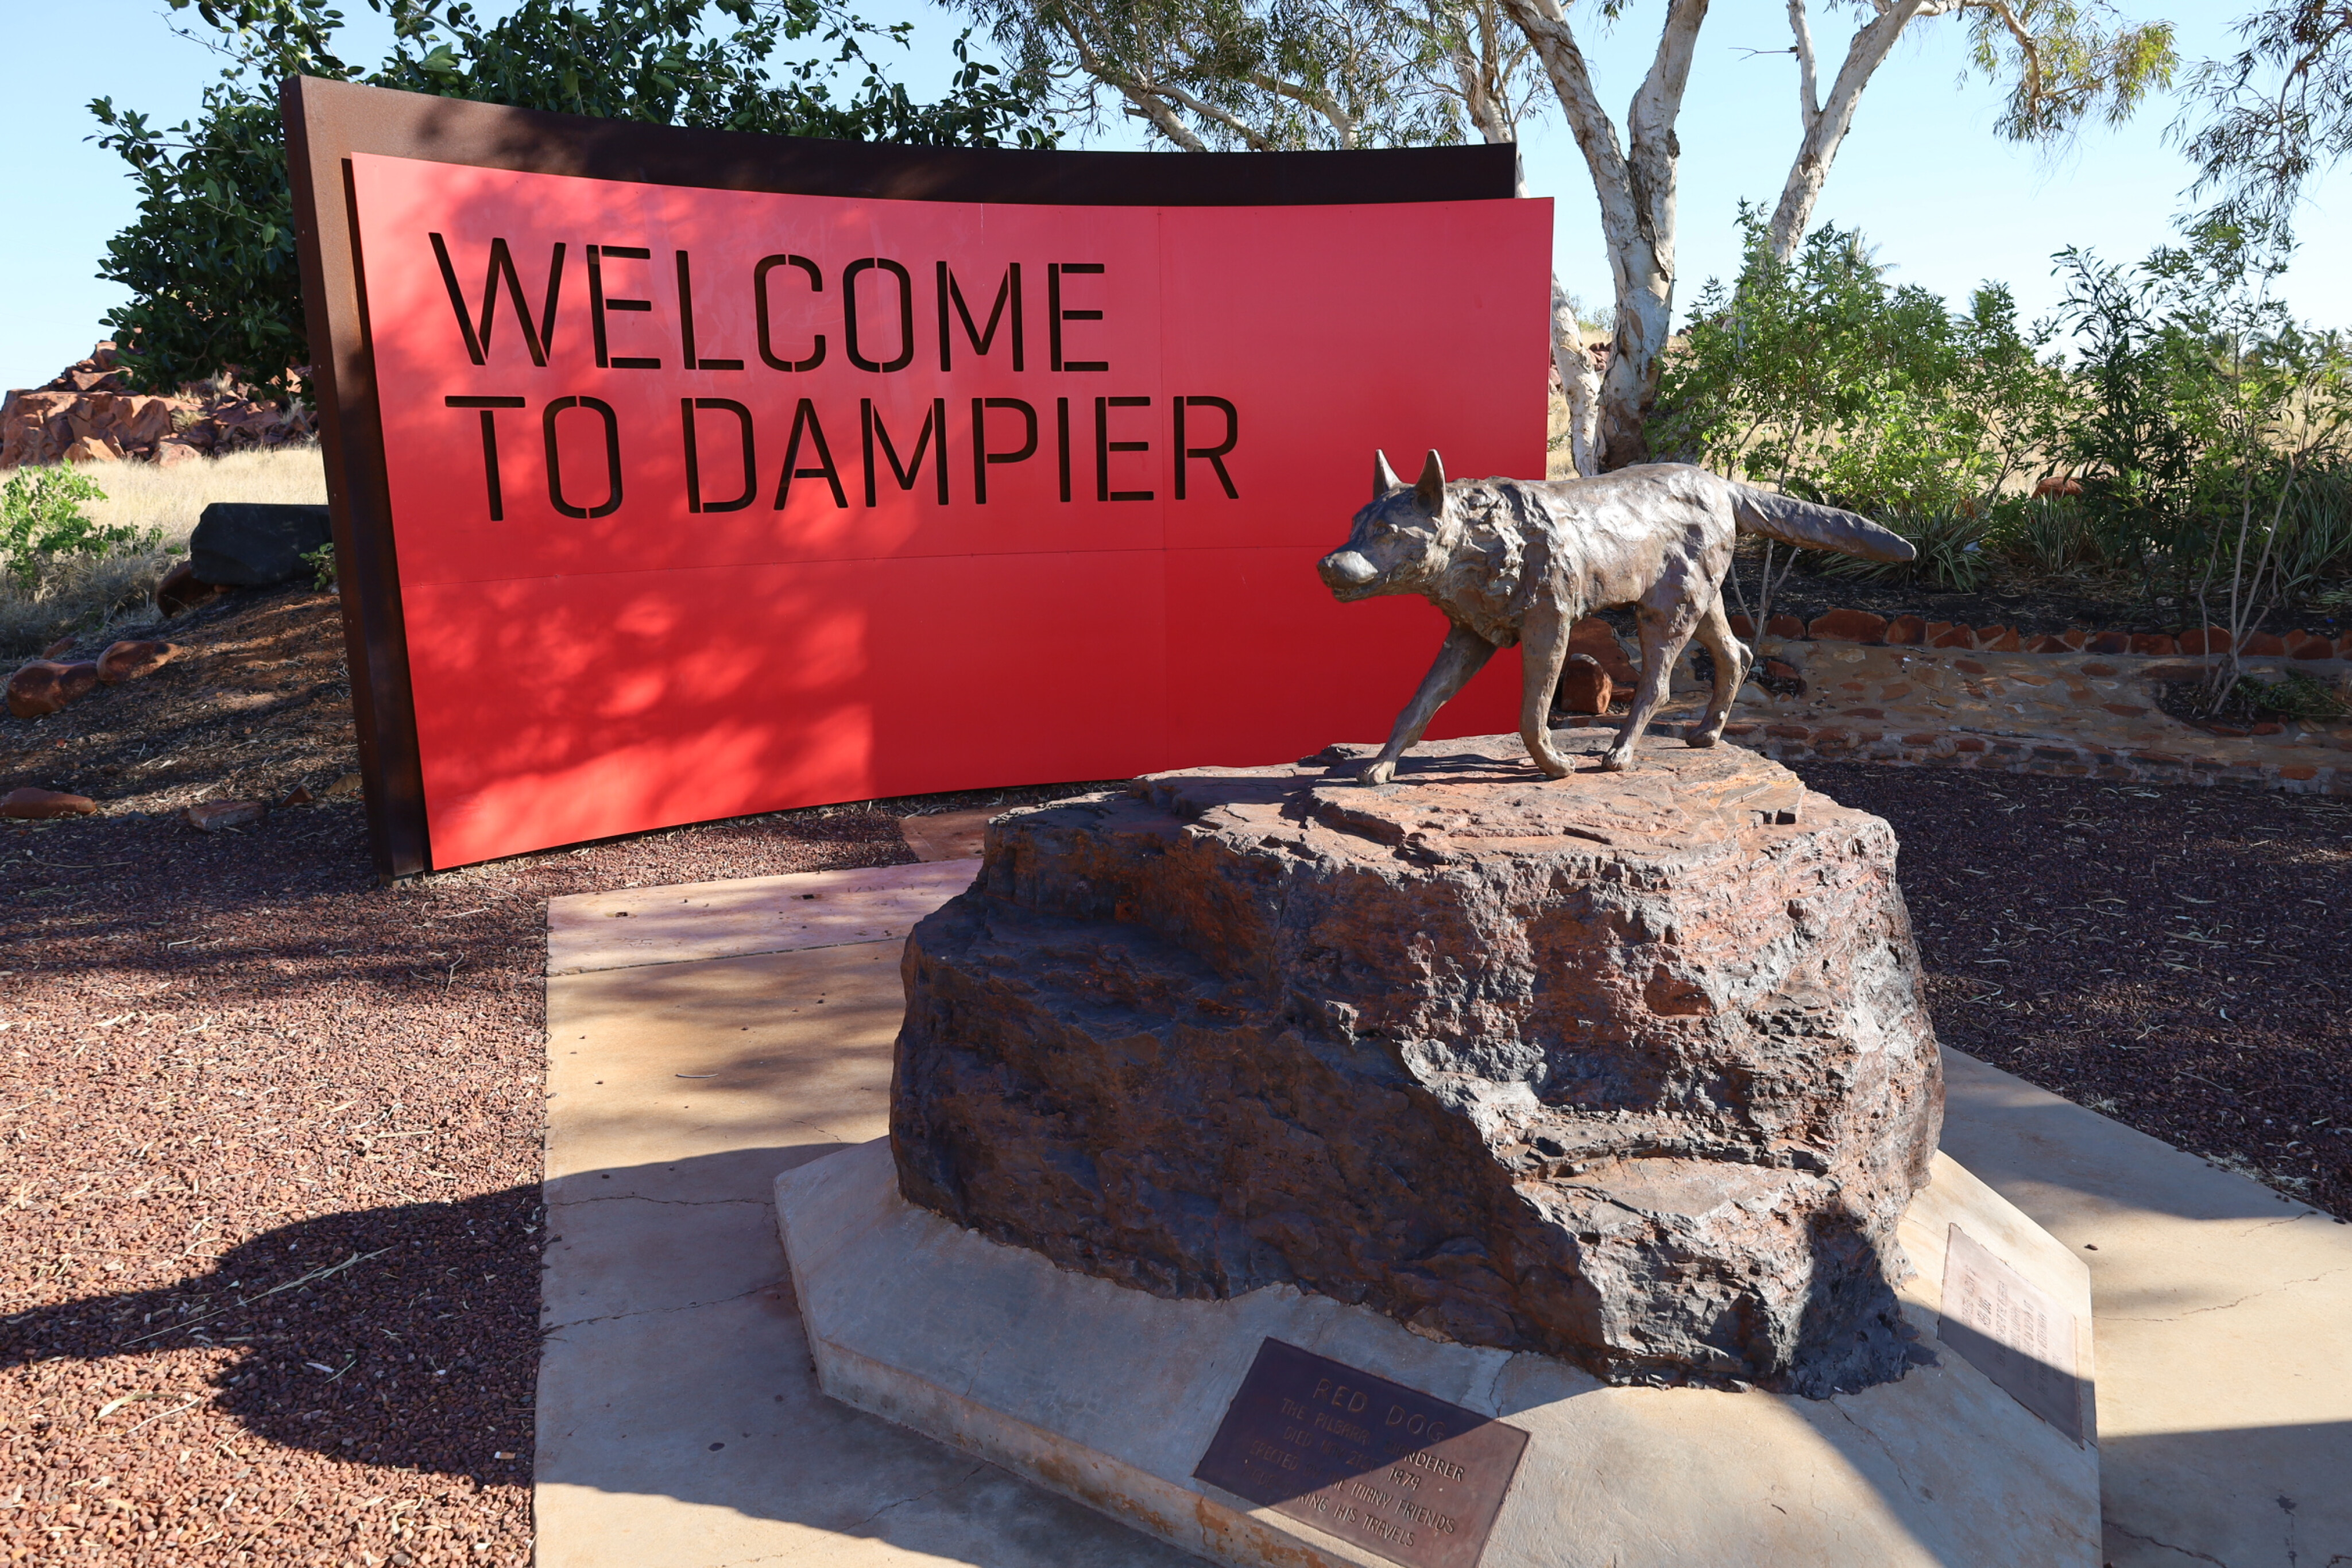 72231b5d/red dog at dampier pilbara explore wa 4x4 australia JPG